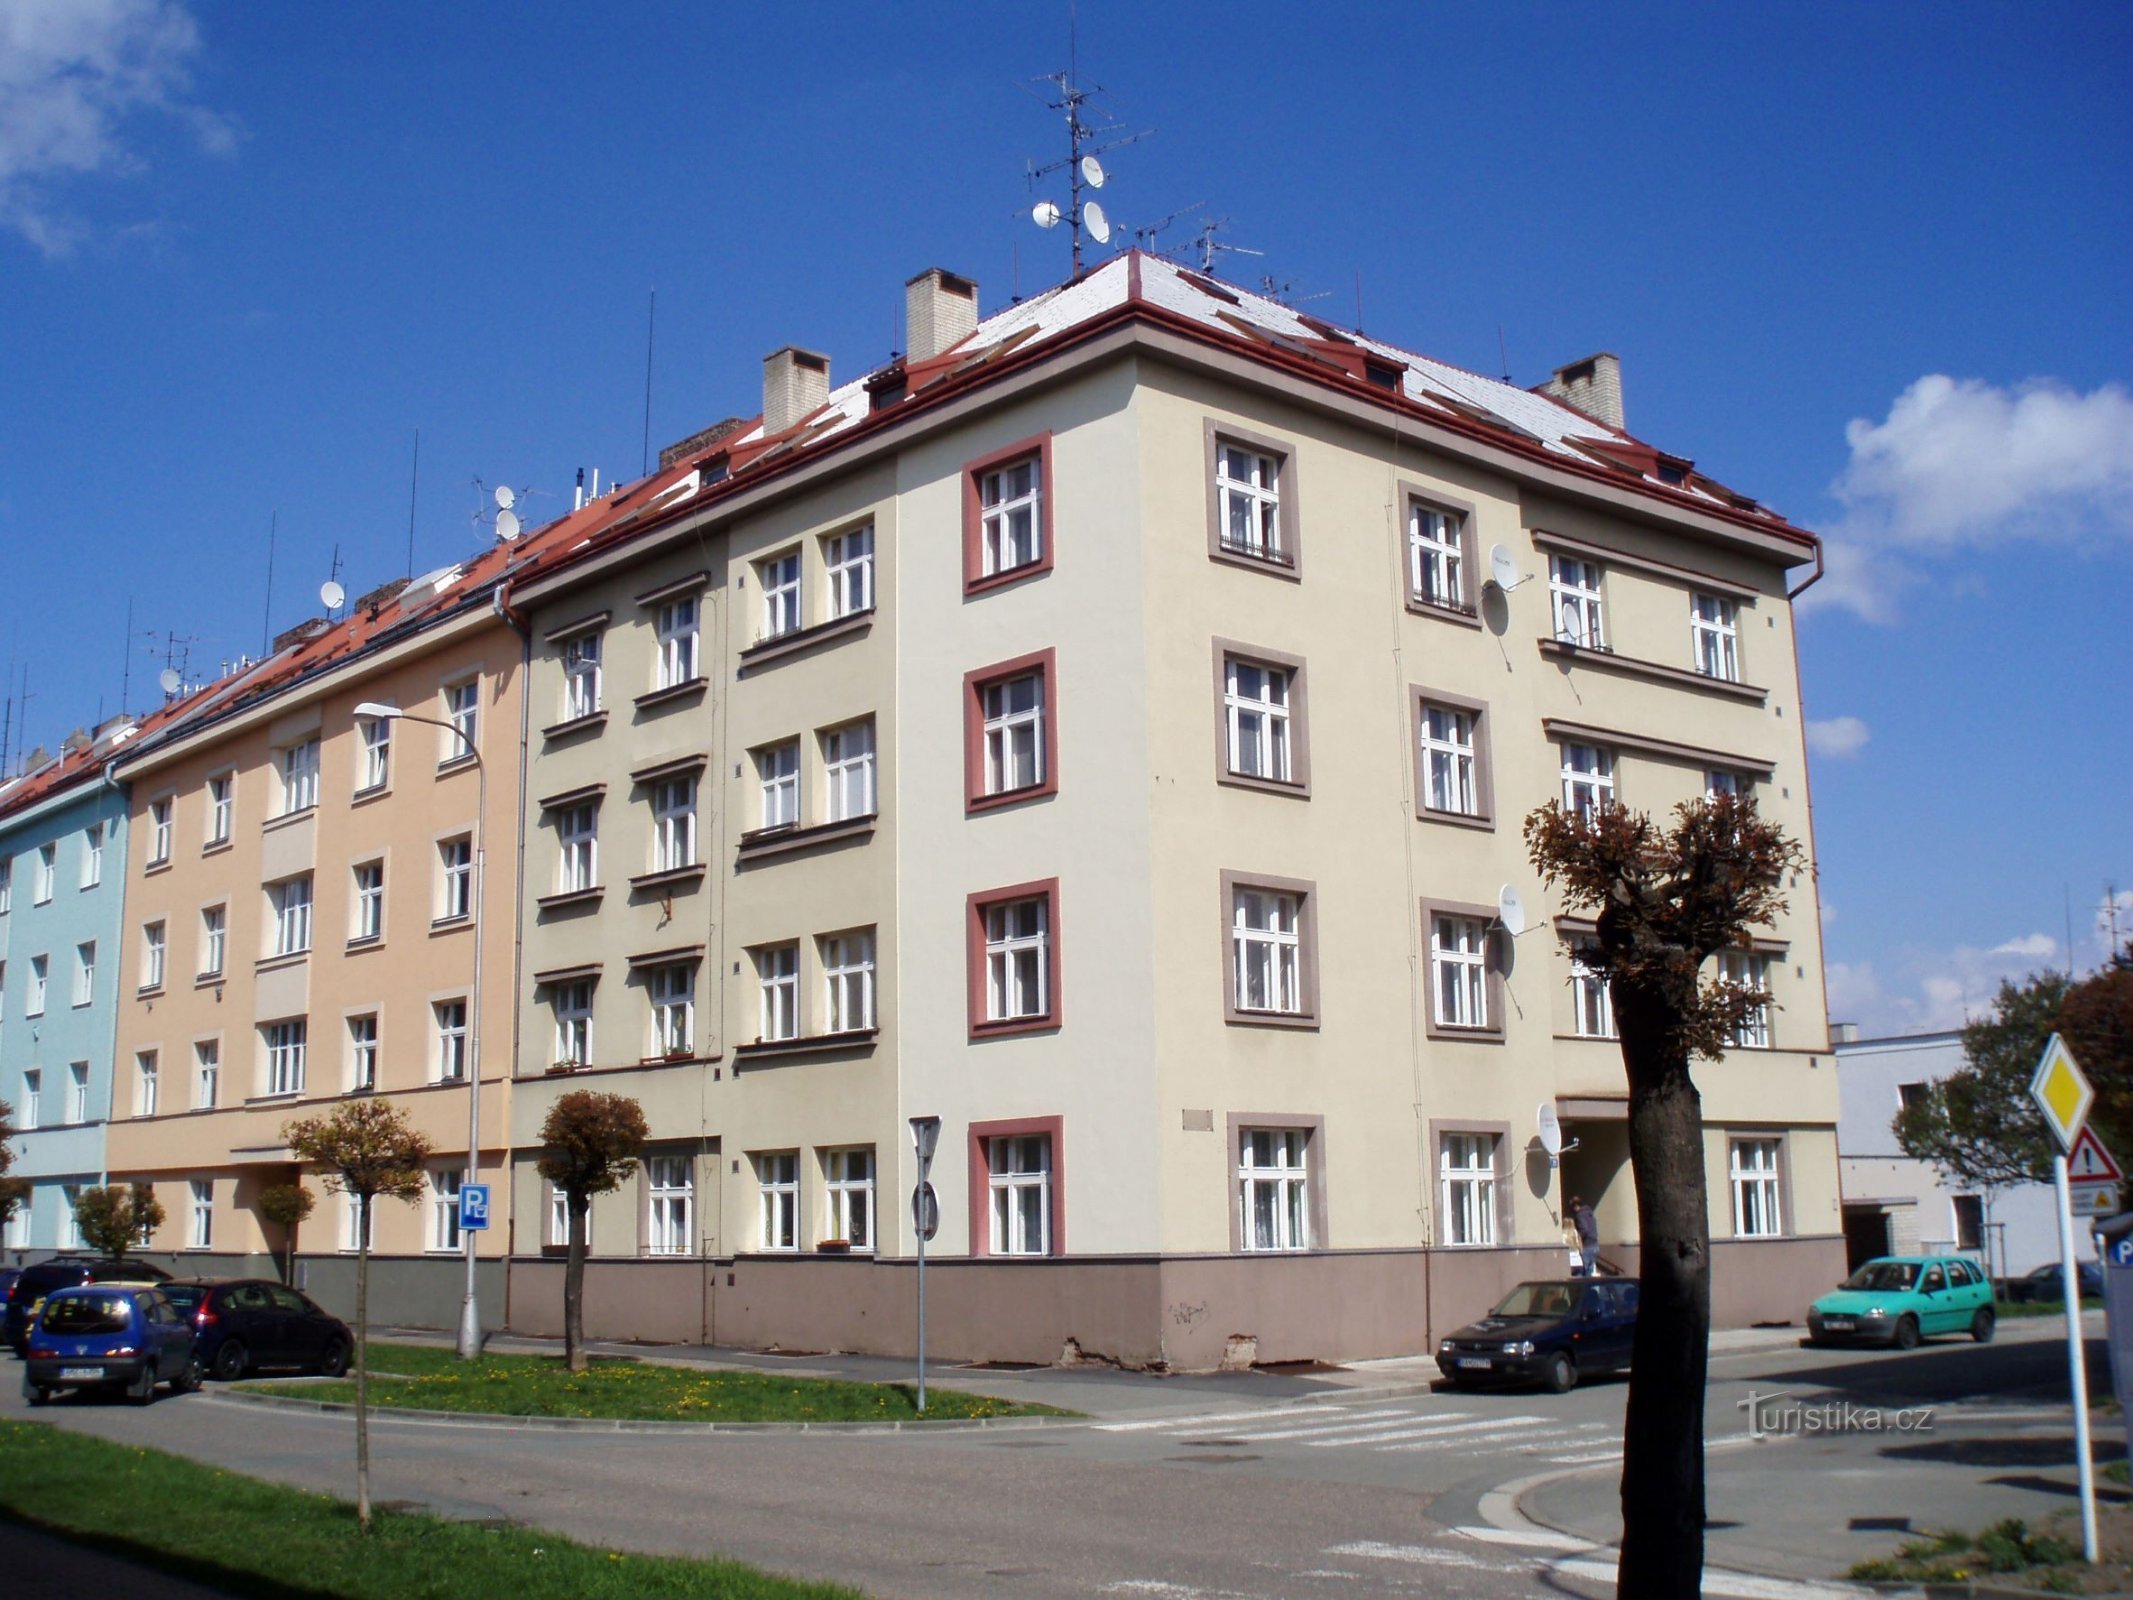 Albertova čp. 826 (Hradec Králové, 21.4.2012)